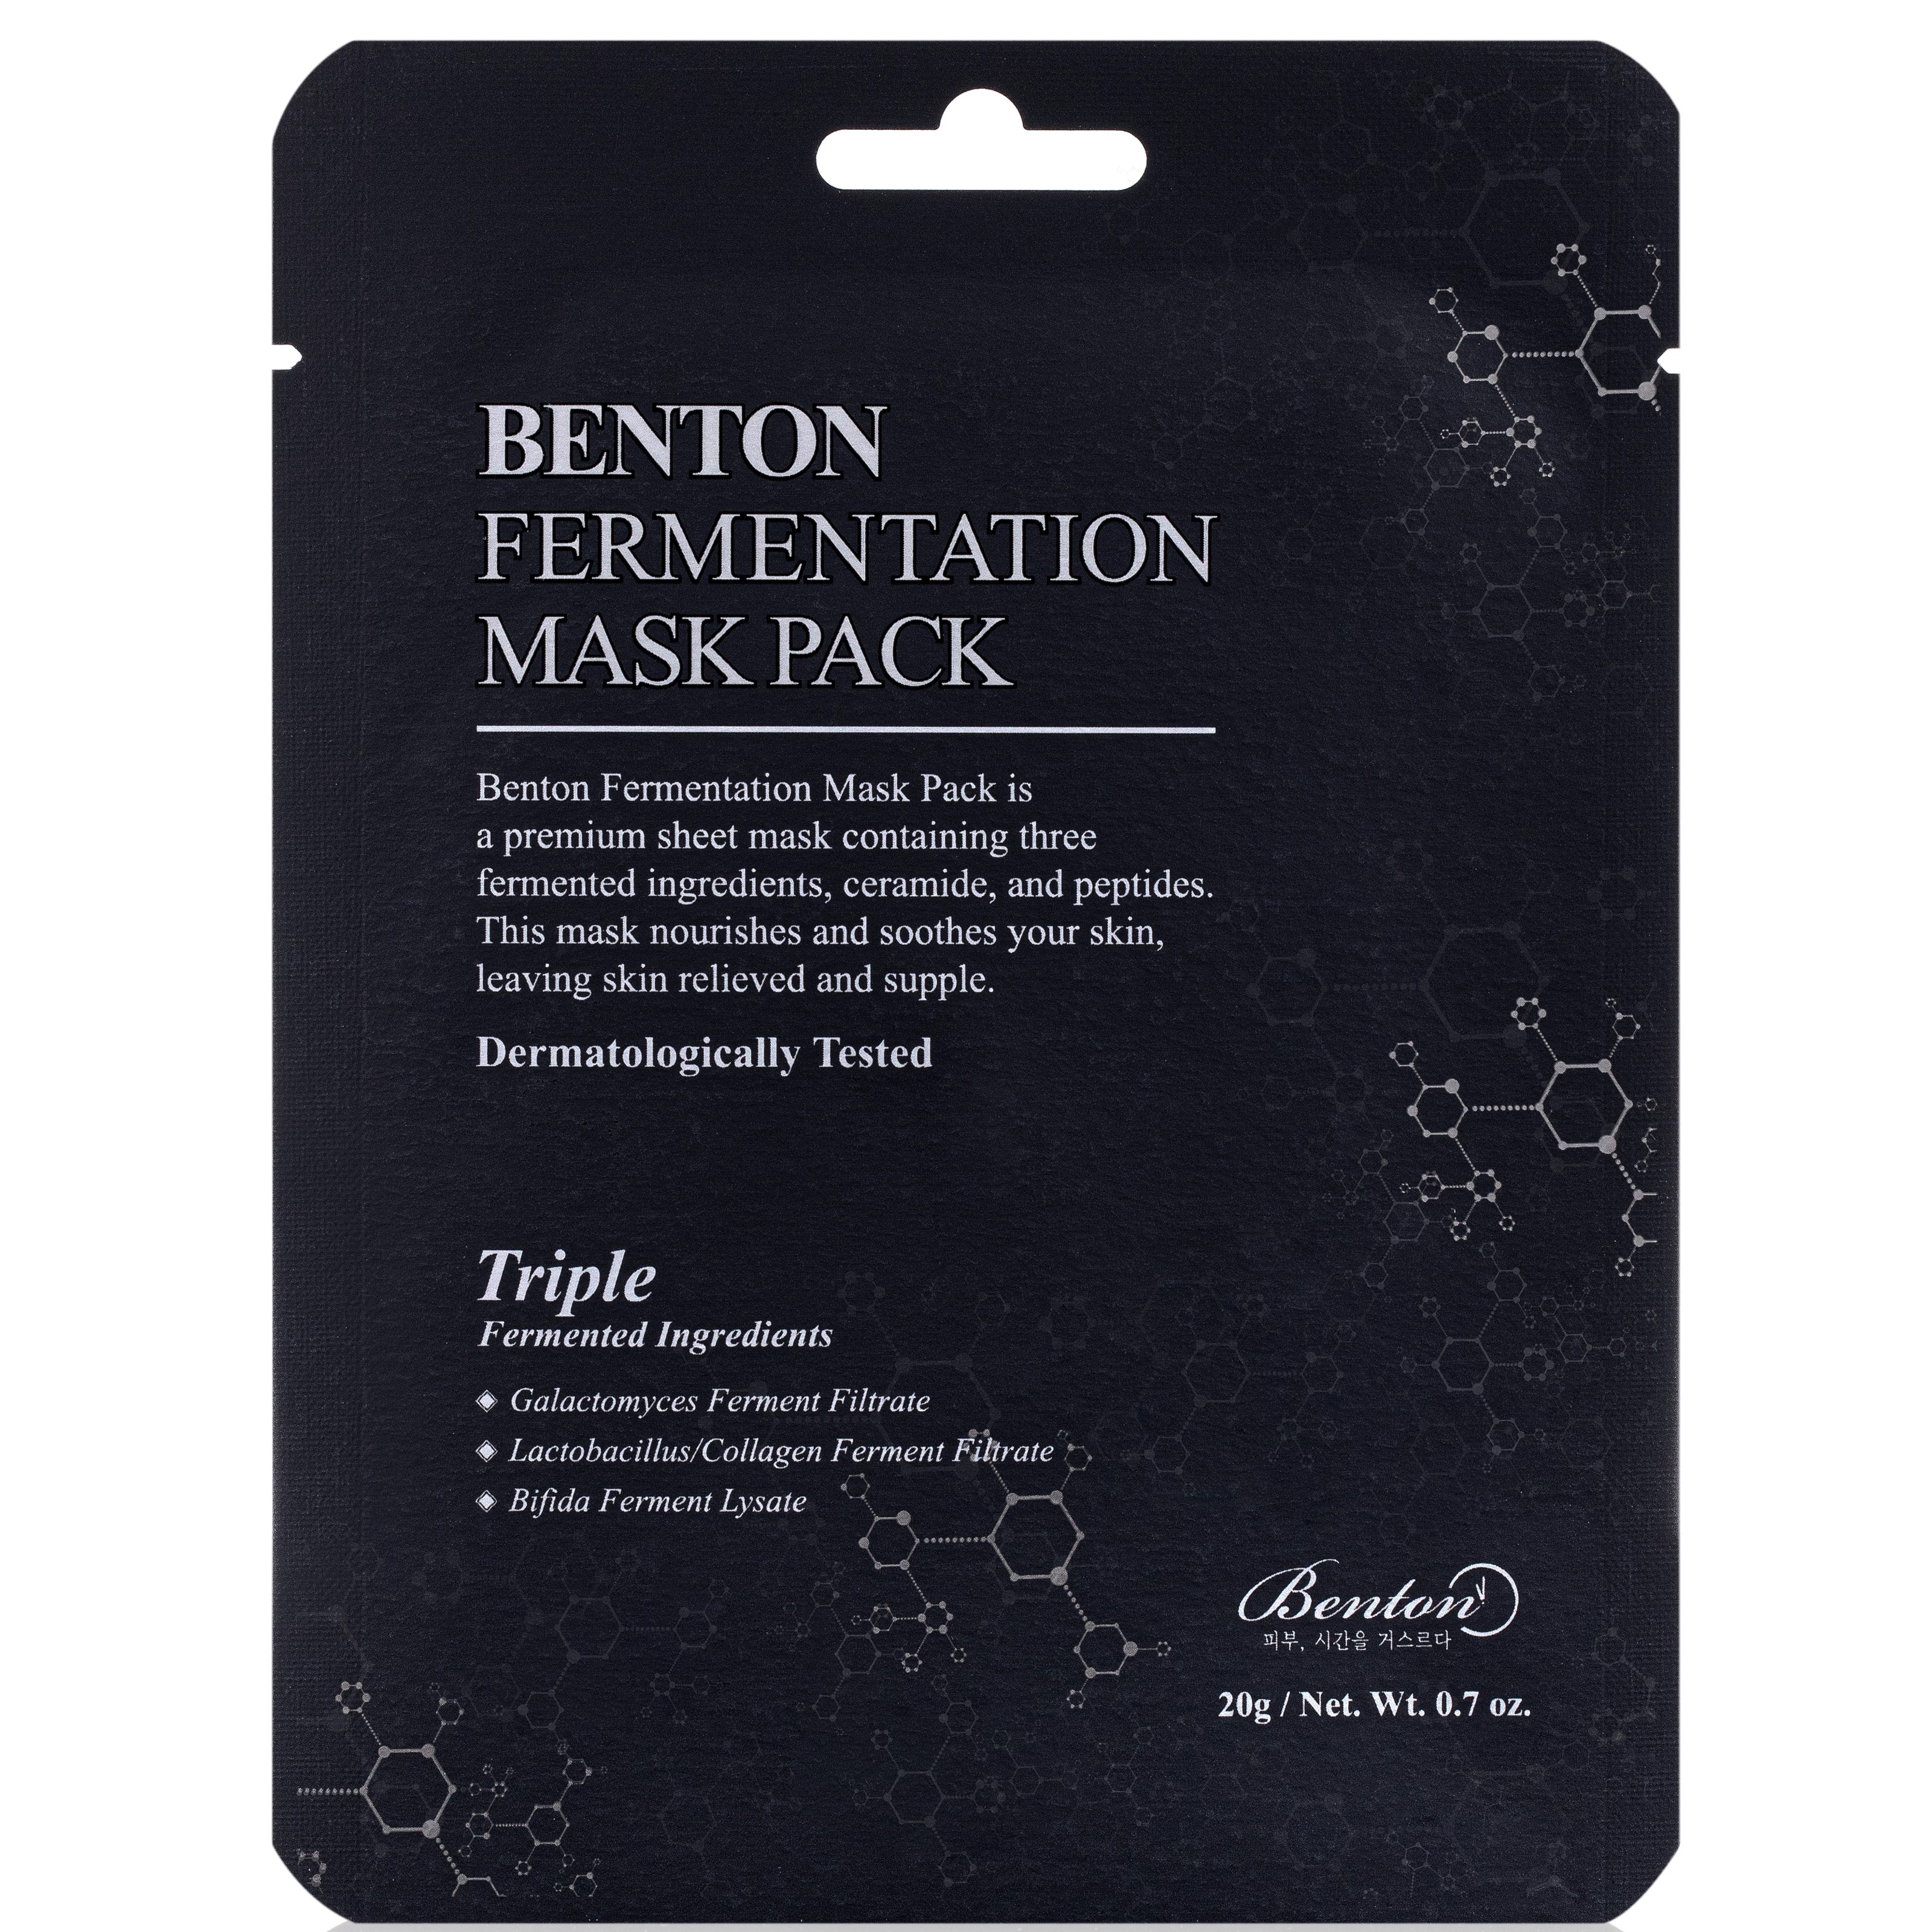 Benton Fermentation Mask